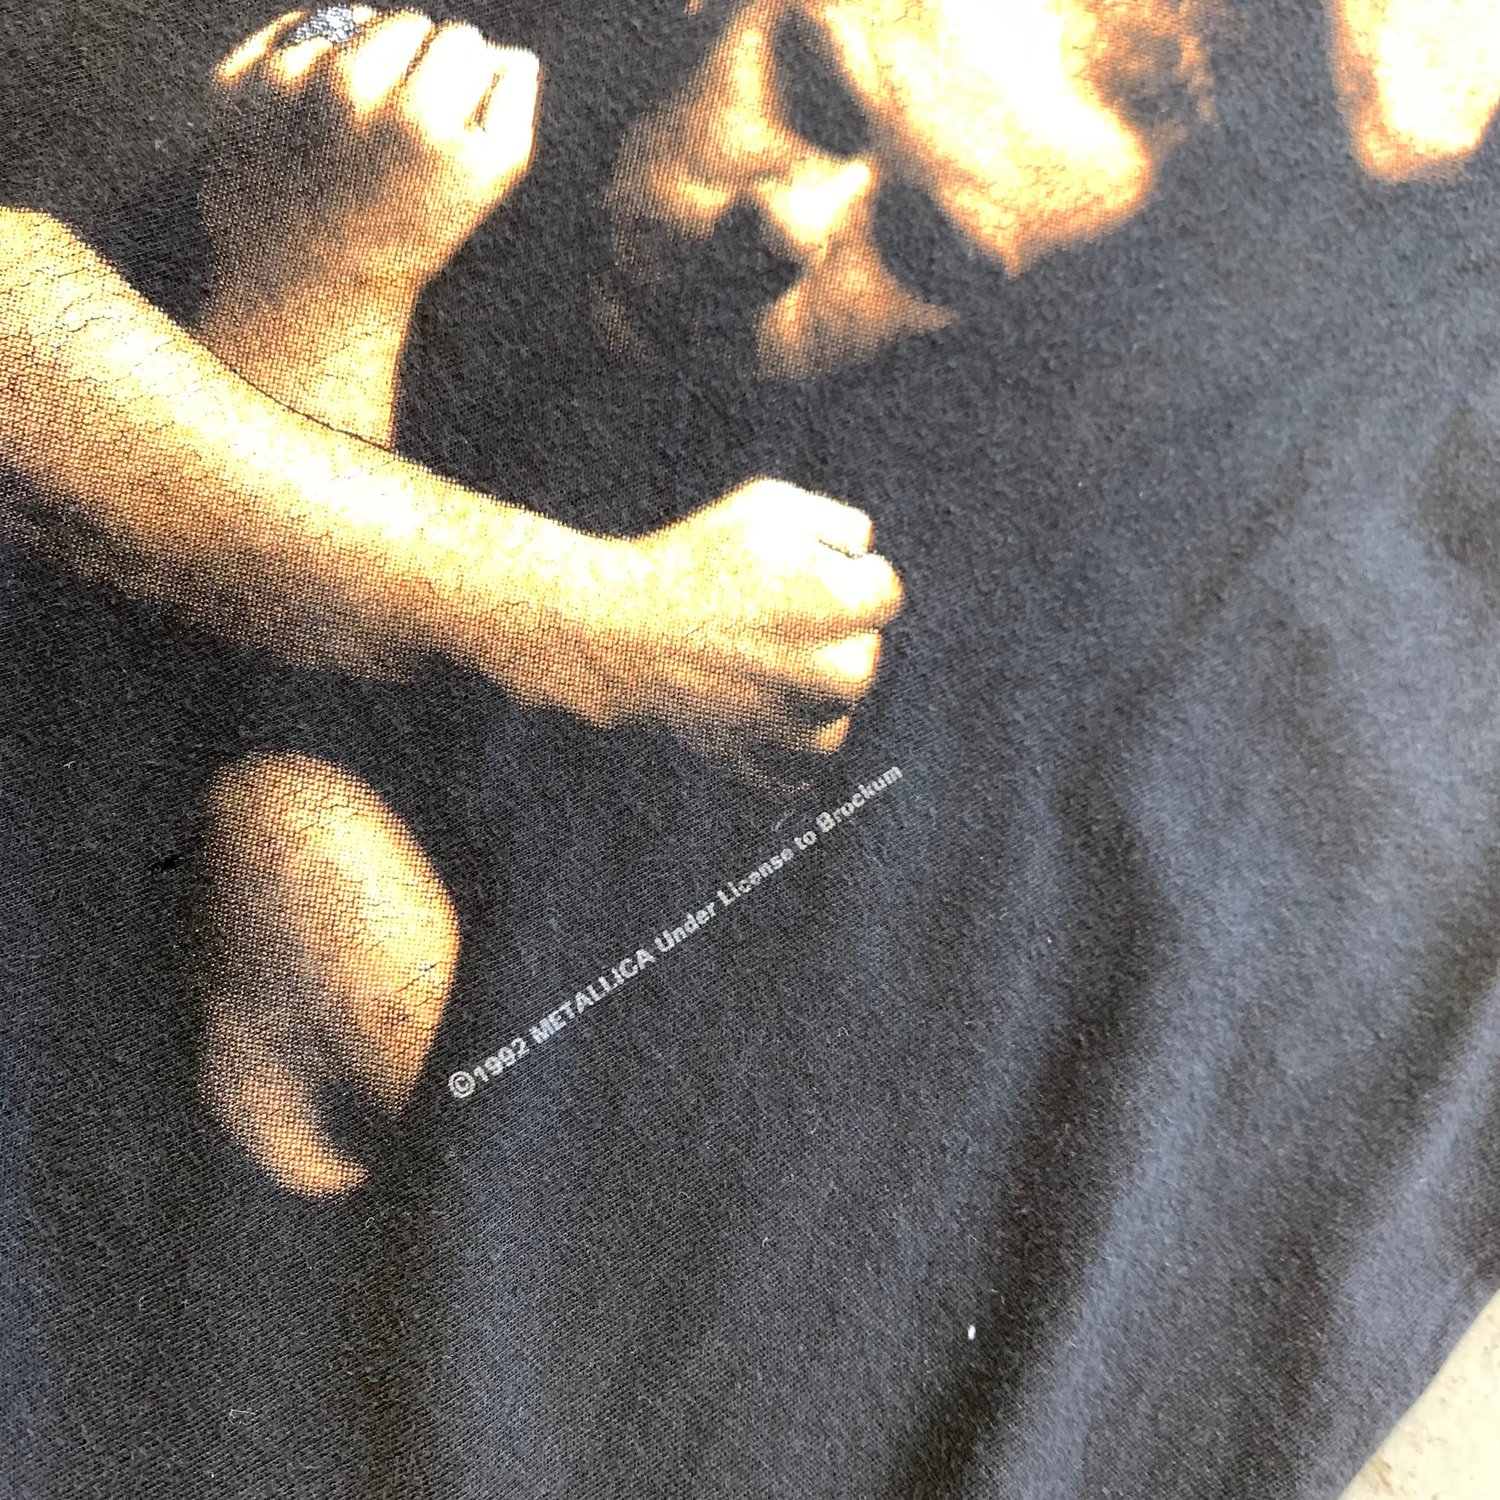 Image of RARE 1992 Metallica brockum T-shirt size large 